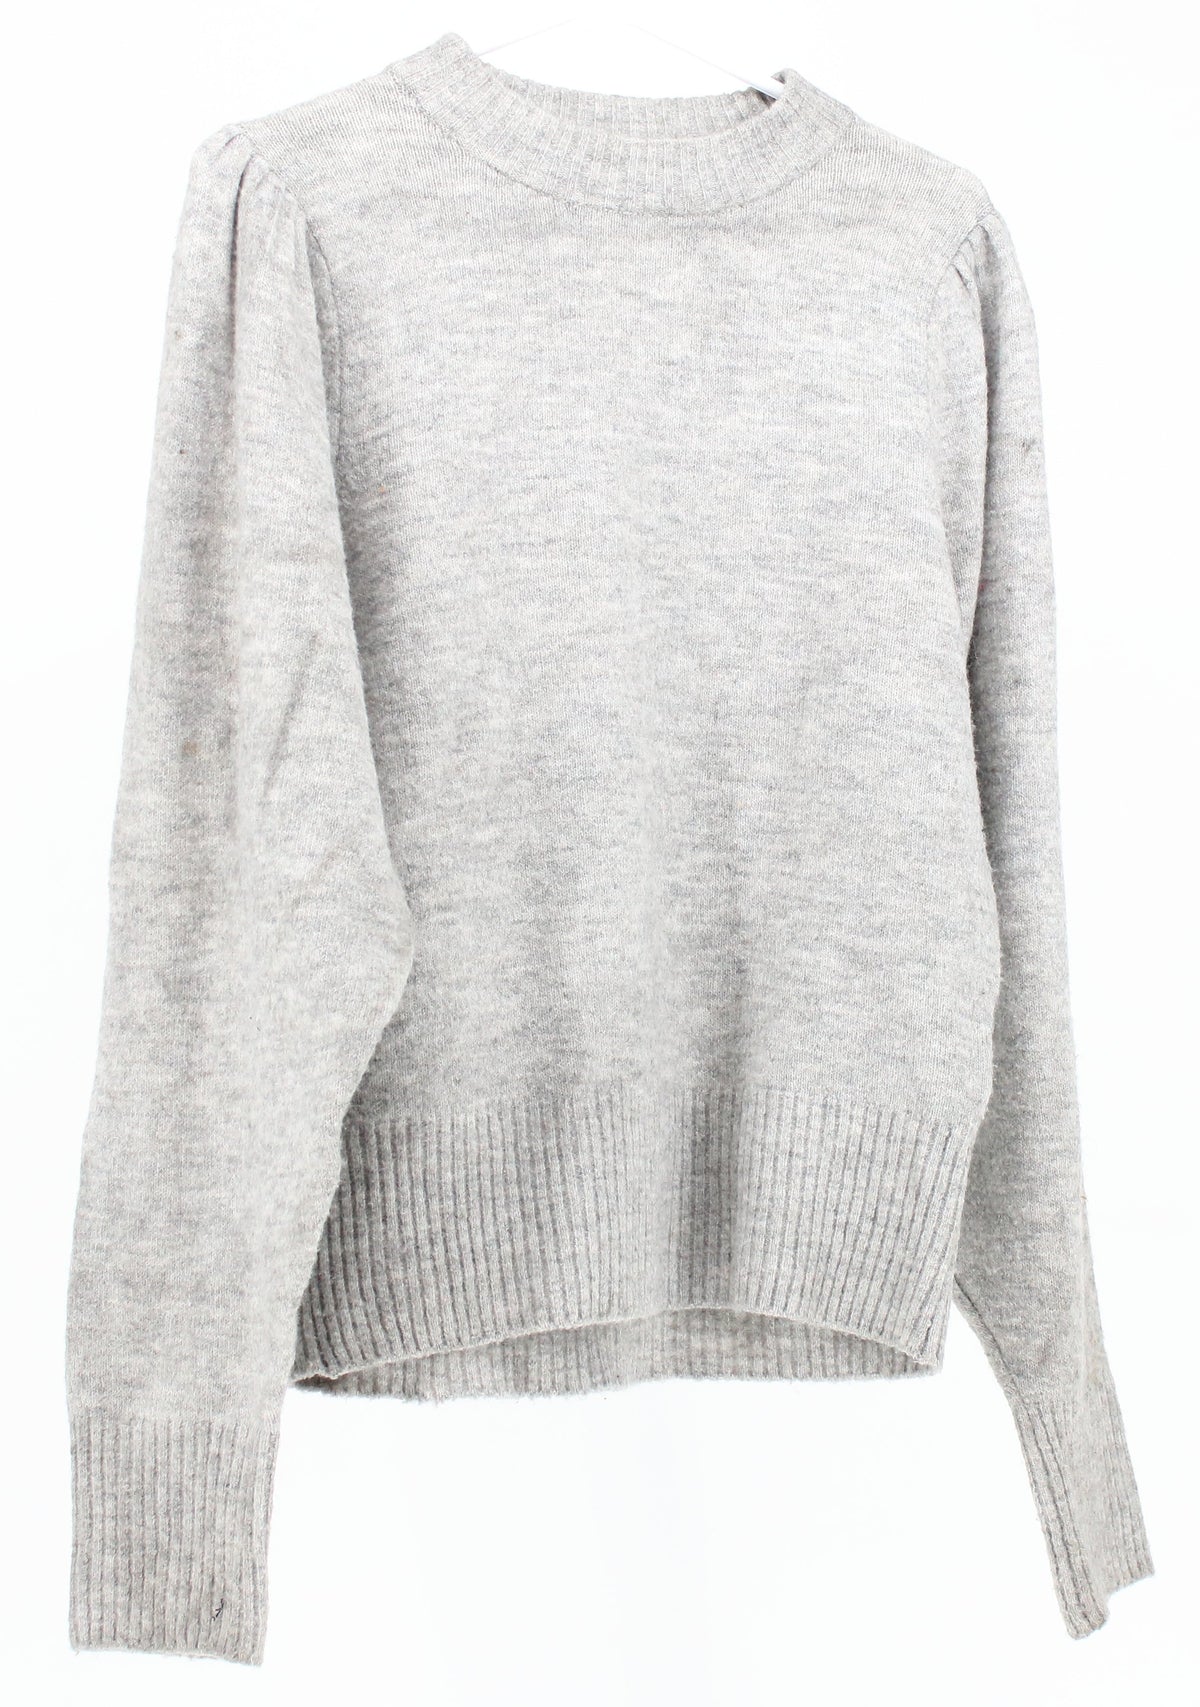 H&M Light Grey Crew Neck Acrylic Sweater